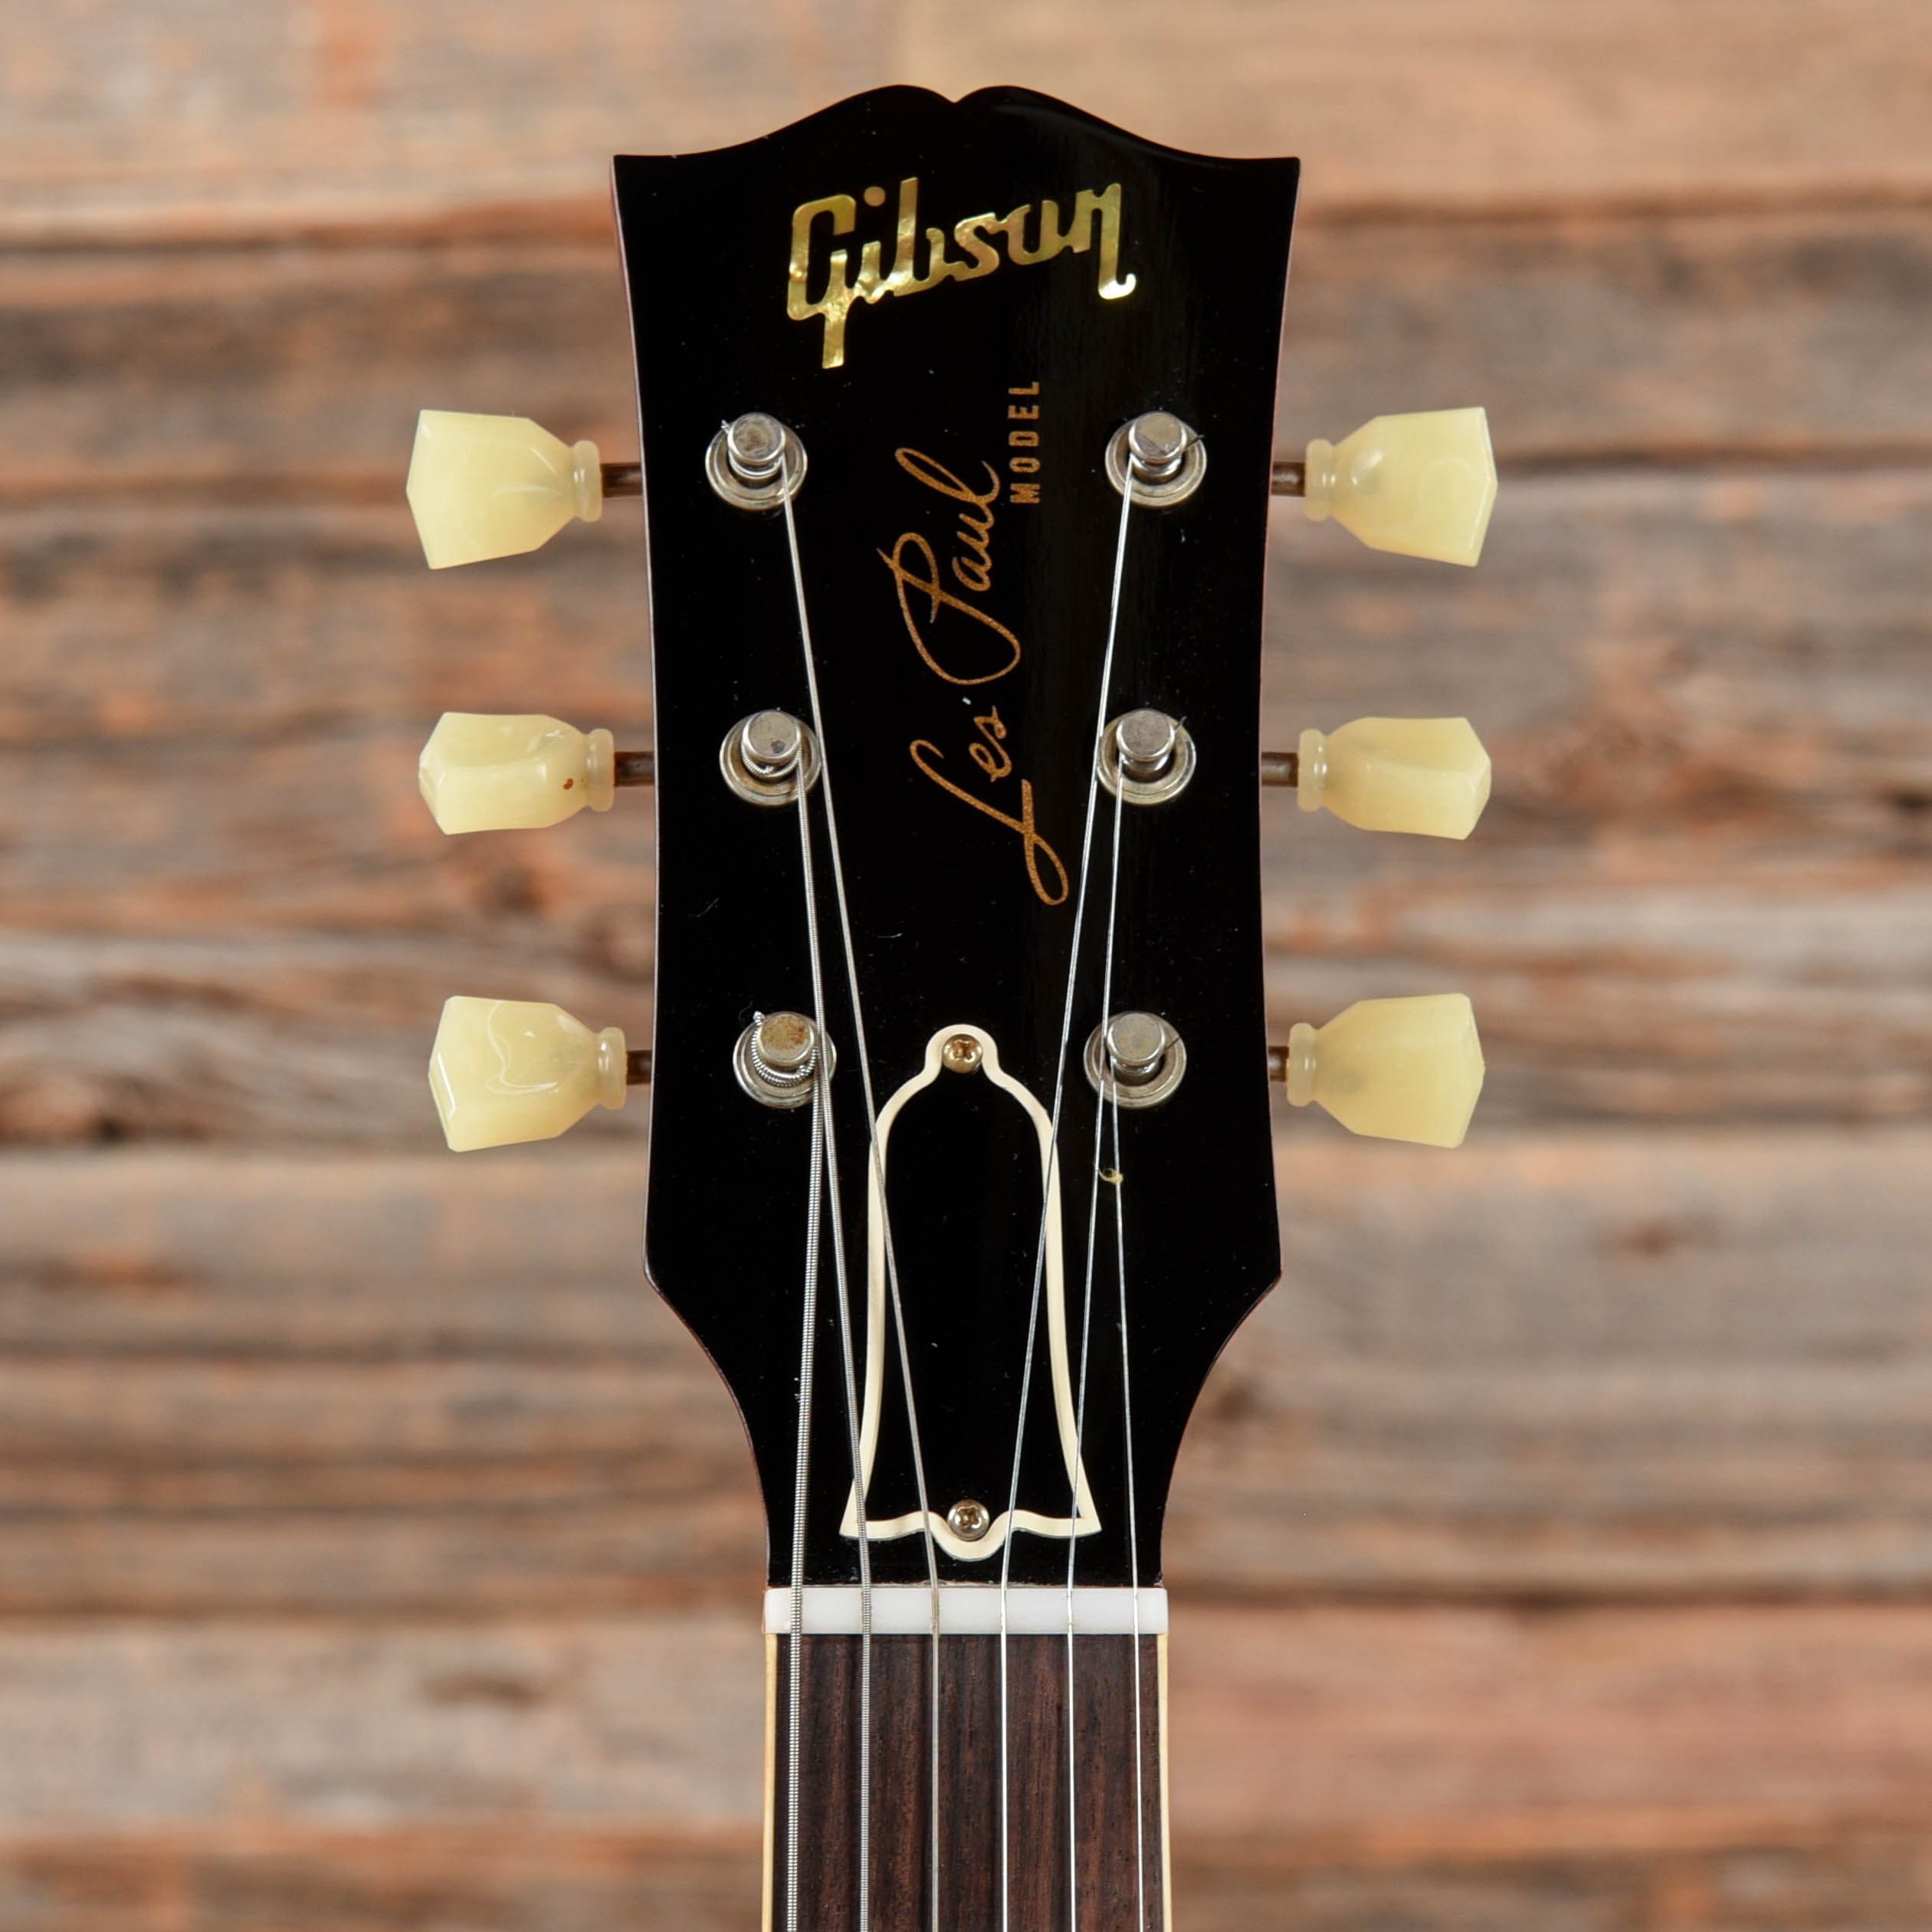 Gibson '59 Les Paul Standard Murphy Painted Sunburst 2018 Electric Guitars / Solid Body